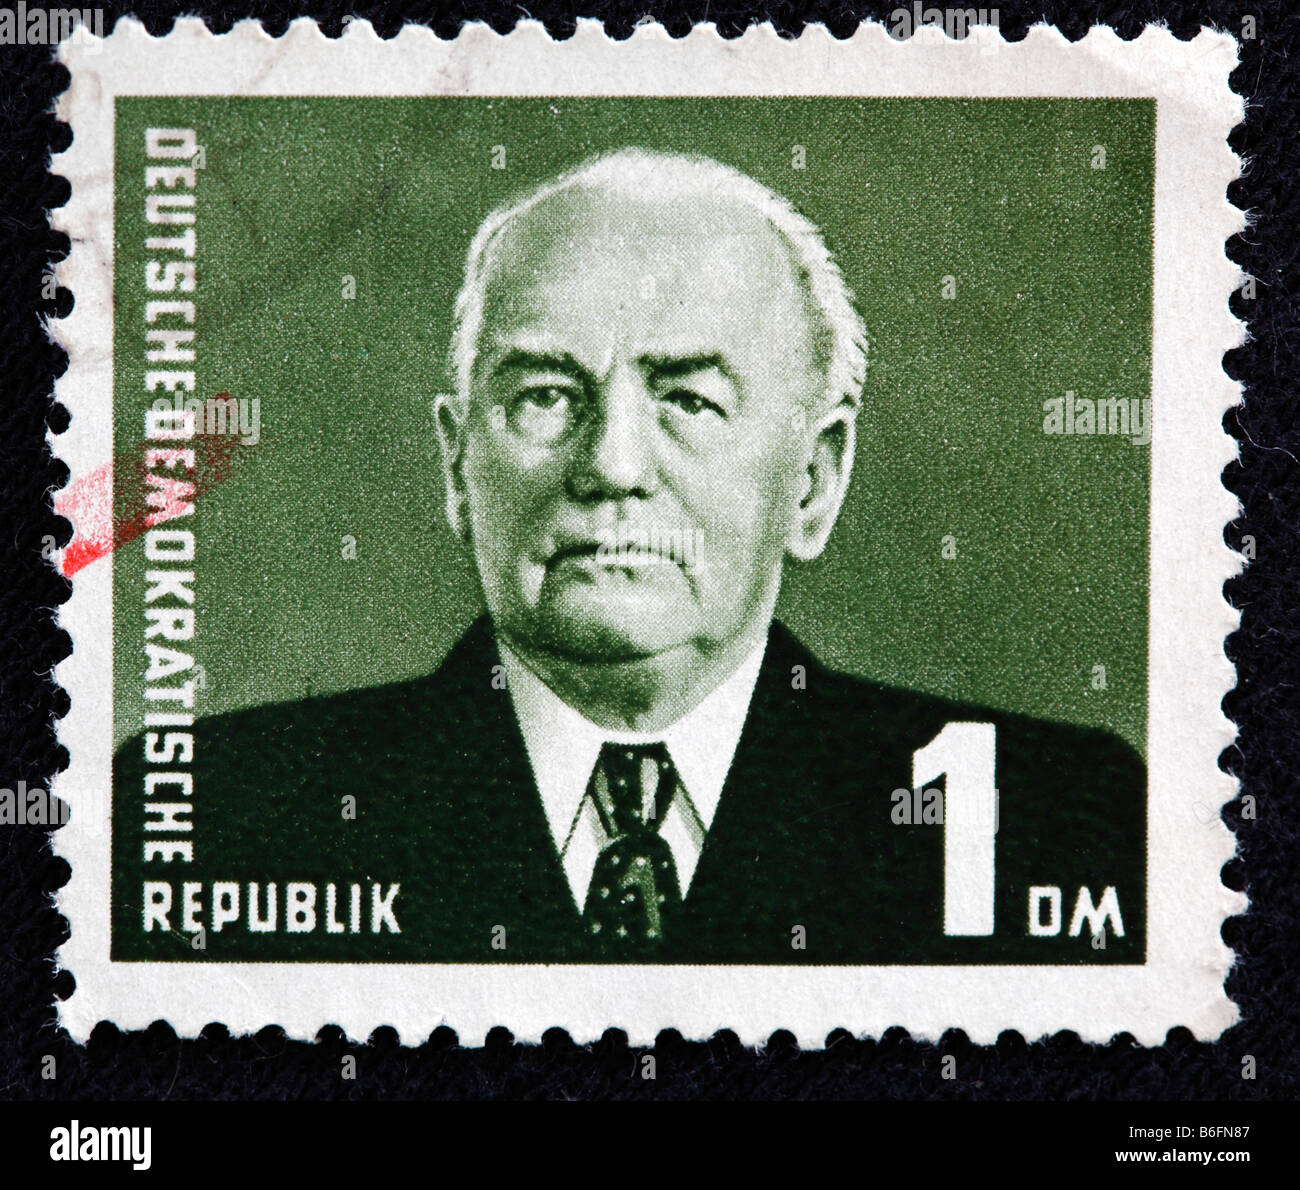 Wilhelm Pieck, President of East Germany German Democratic Republic (1949-1960), postage stamp, Germany Stock Photo